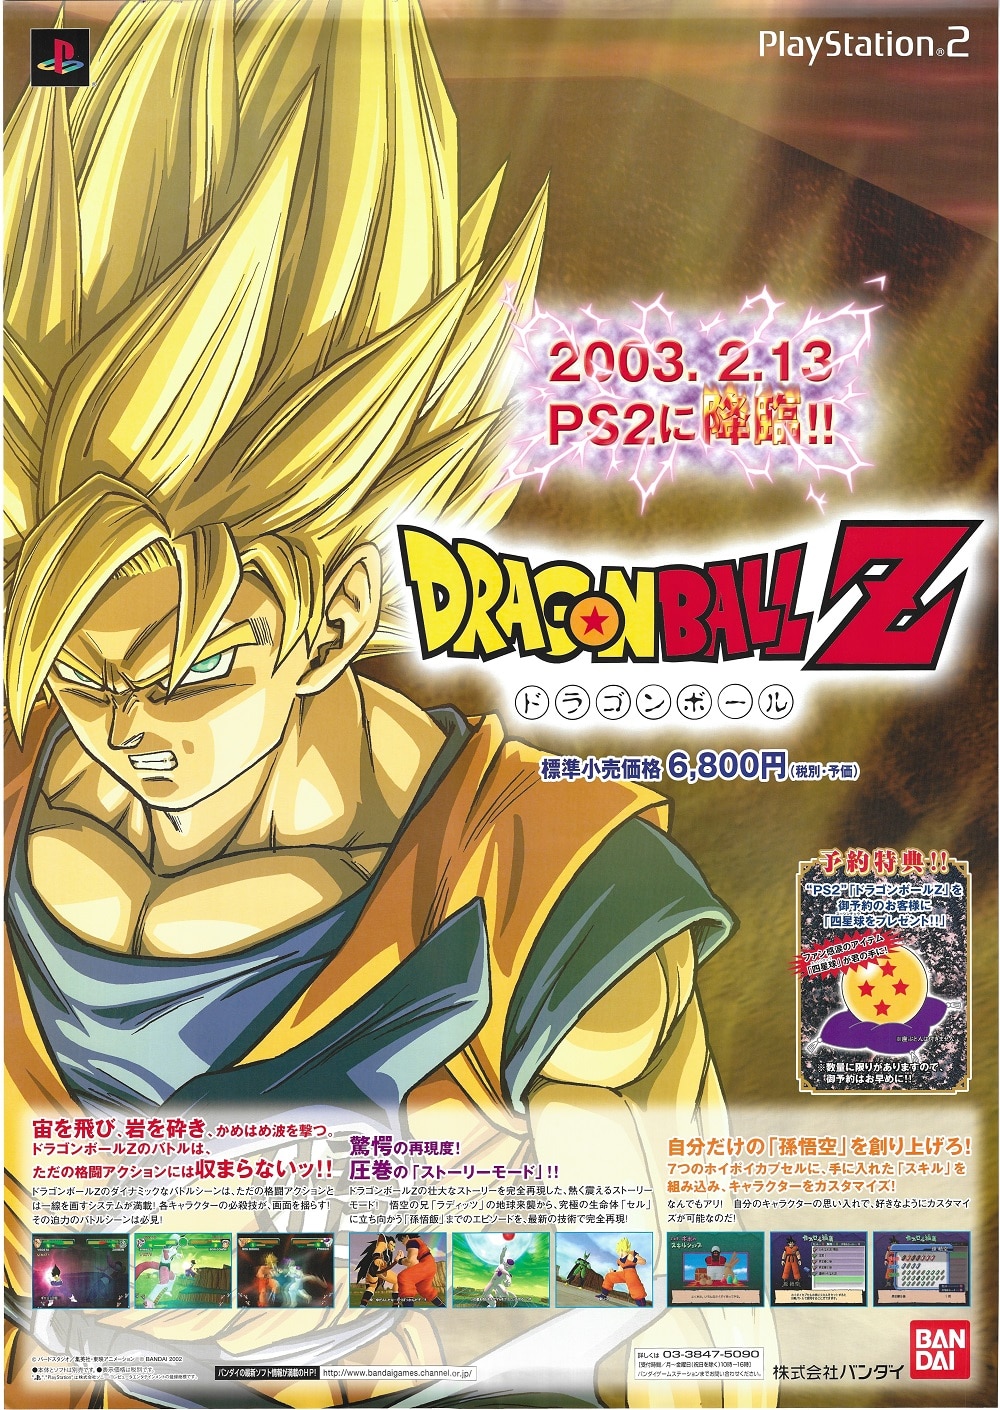 Bandai Promotional Item Dragon Ball Z Ps2 B2 Poster Merchpunk